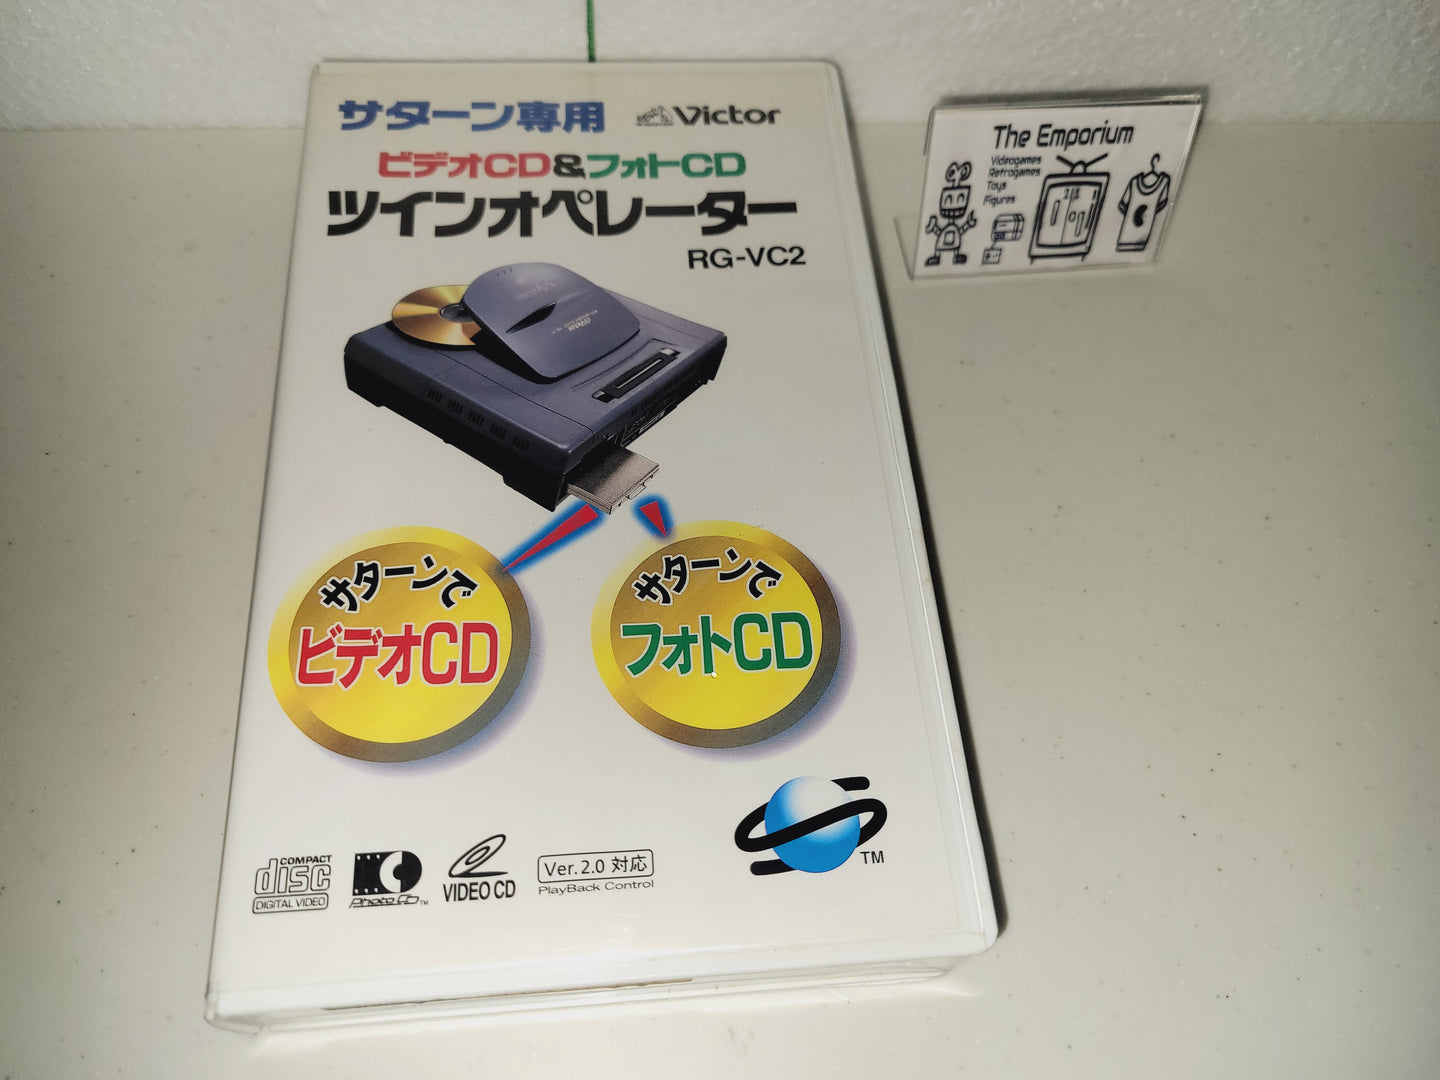 Sega Saturn Exclusive Video CD & Photo CD Twin Operator [RG-VC2] - Sega Saturn sat stn